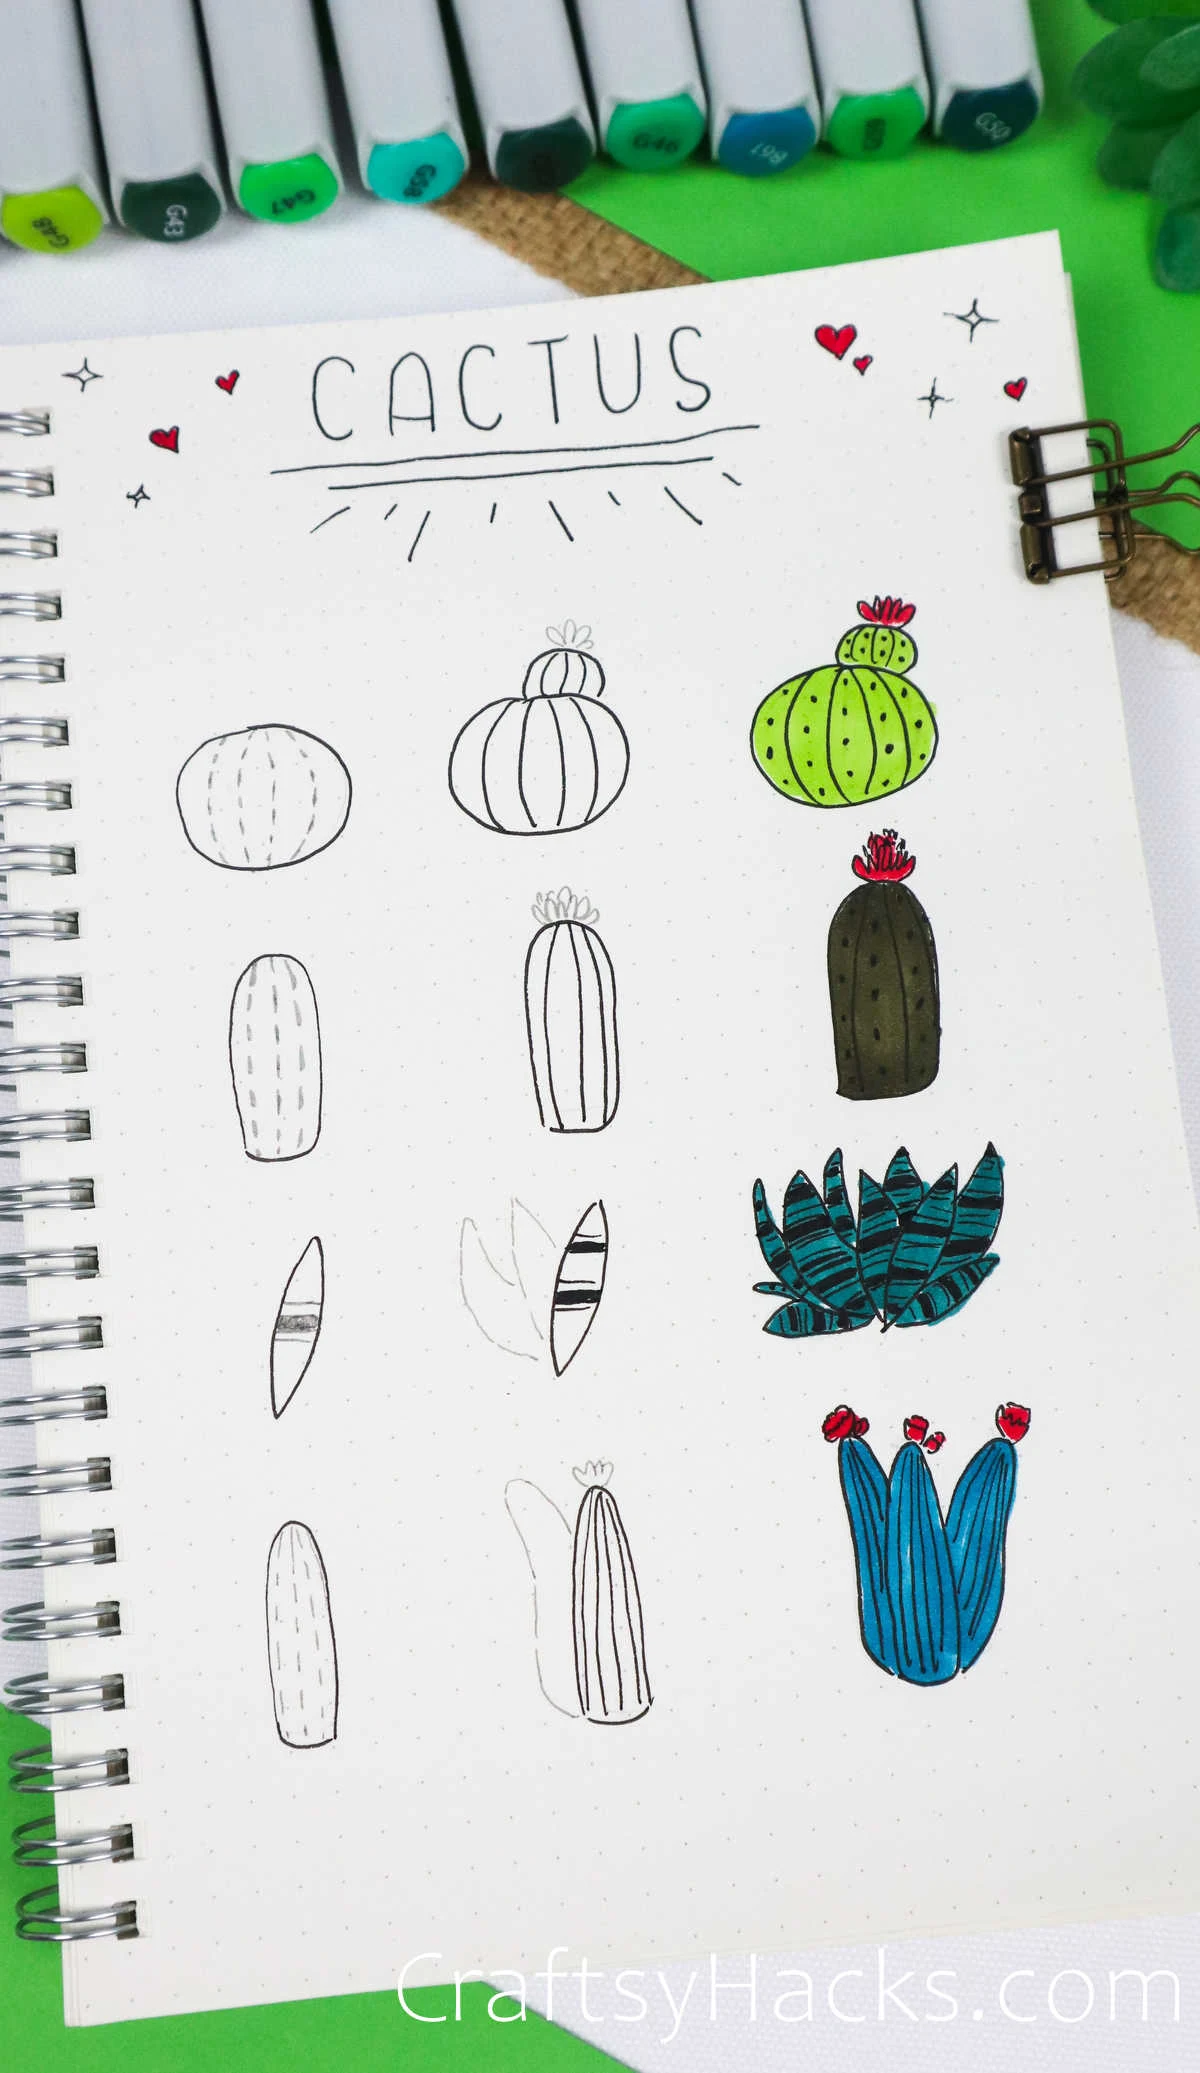 cactus ideas to draw